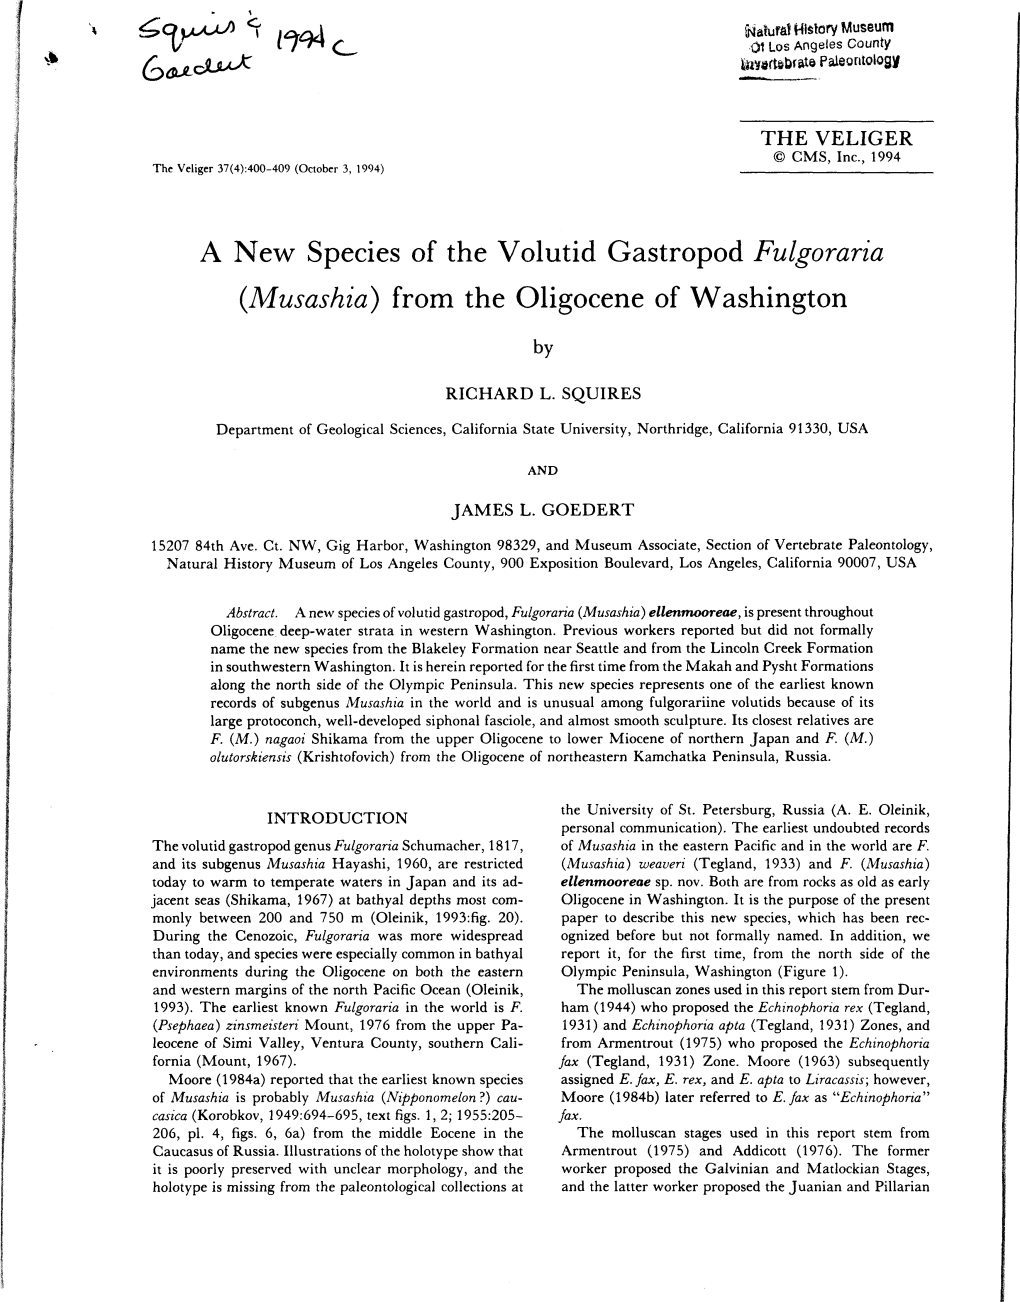 A New Species of the Volutid Gastropod Fulgoraria (Musashia) from the Oligocene of Washington